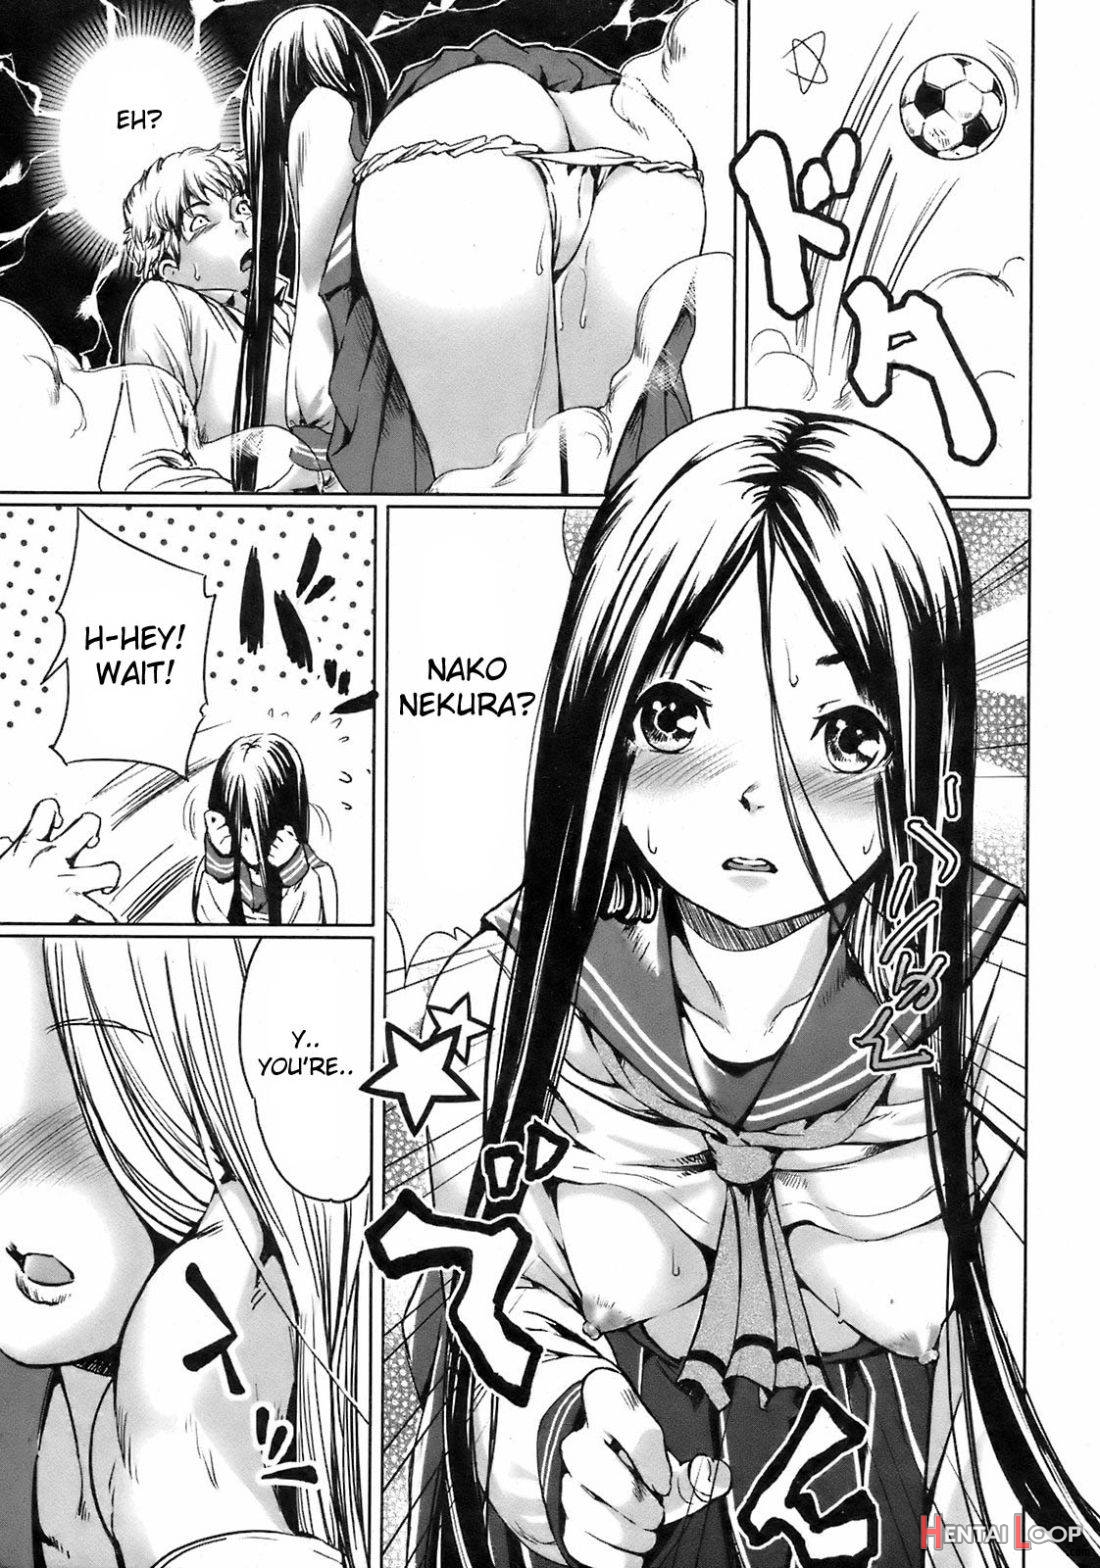 Kininaru Girl page 5